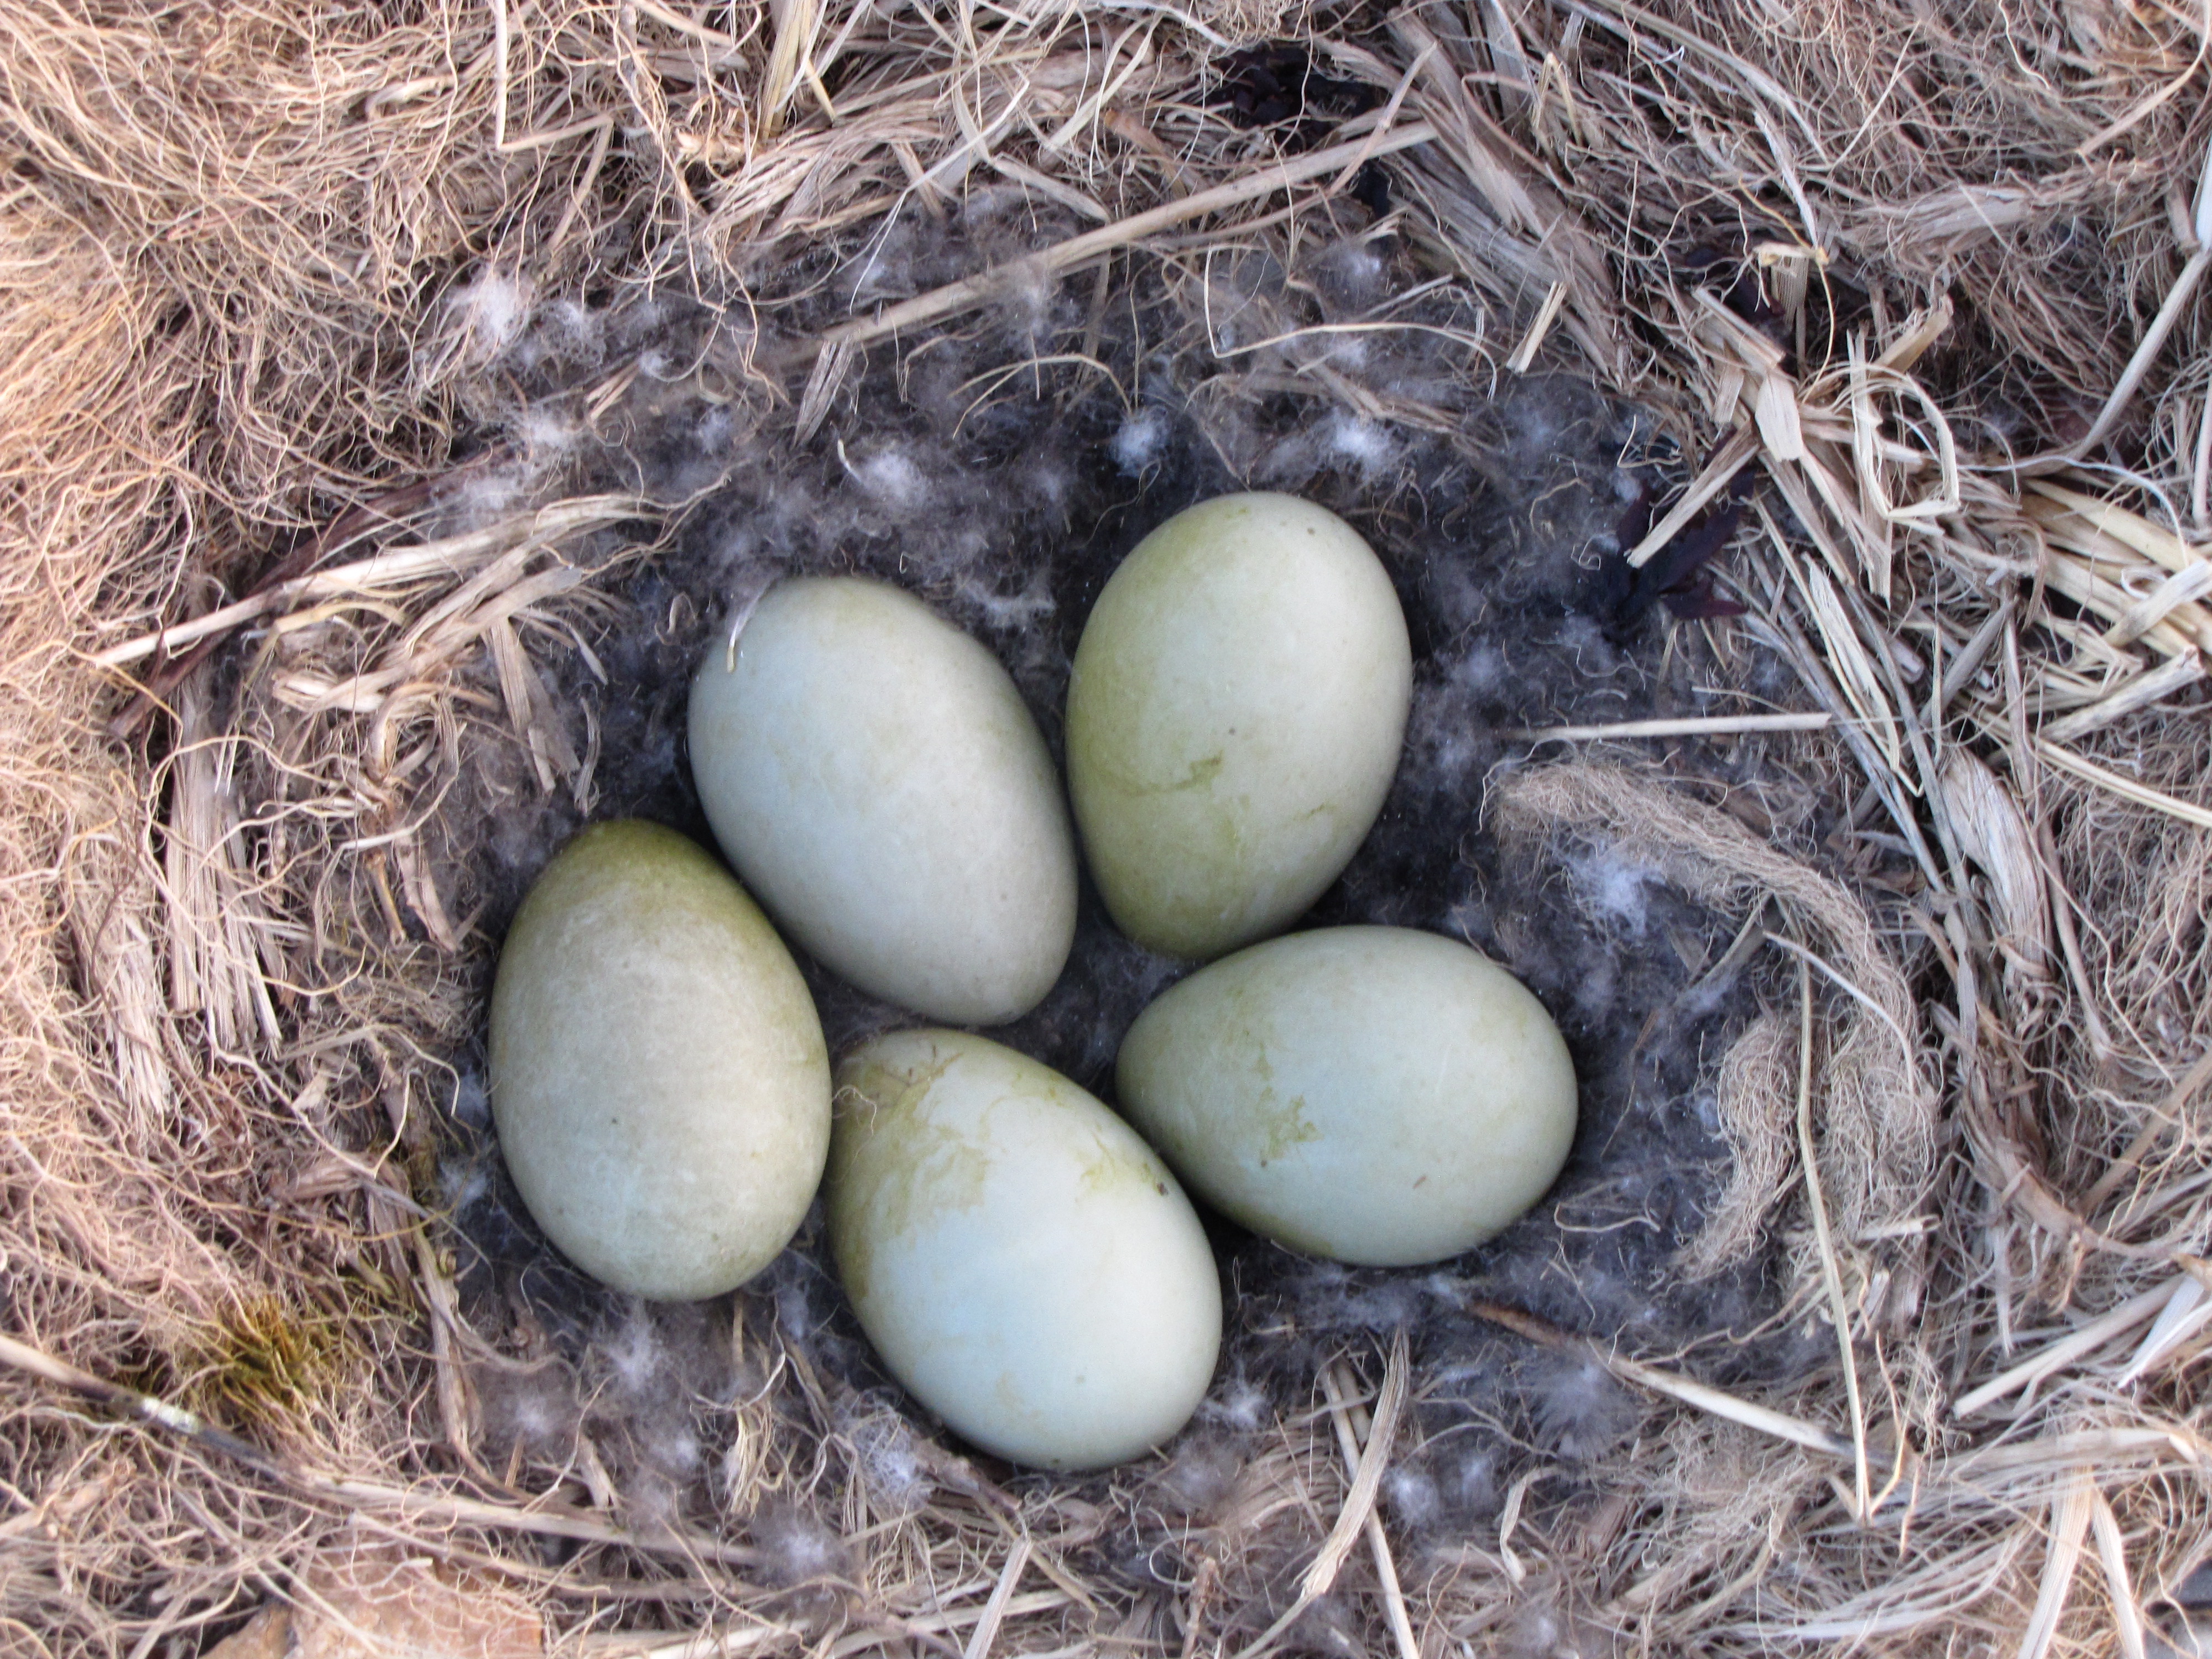 Eggs in a common eider nest.